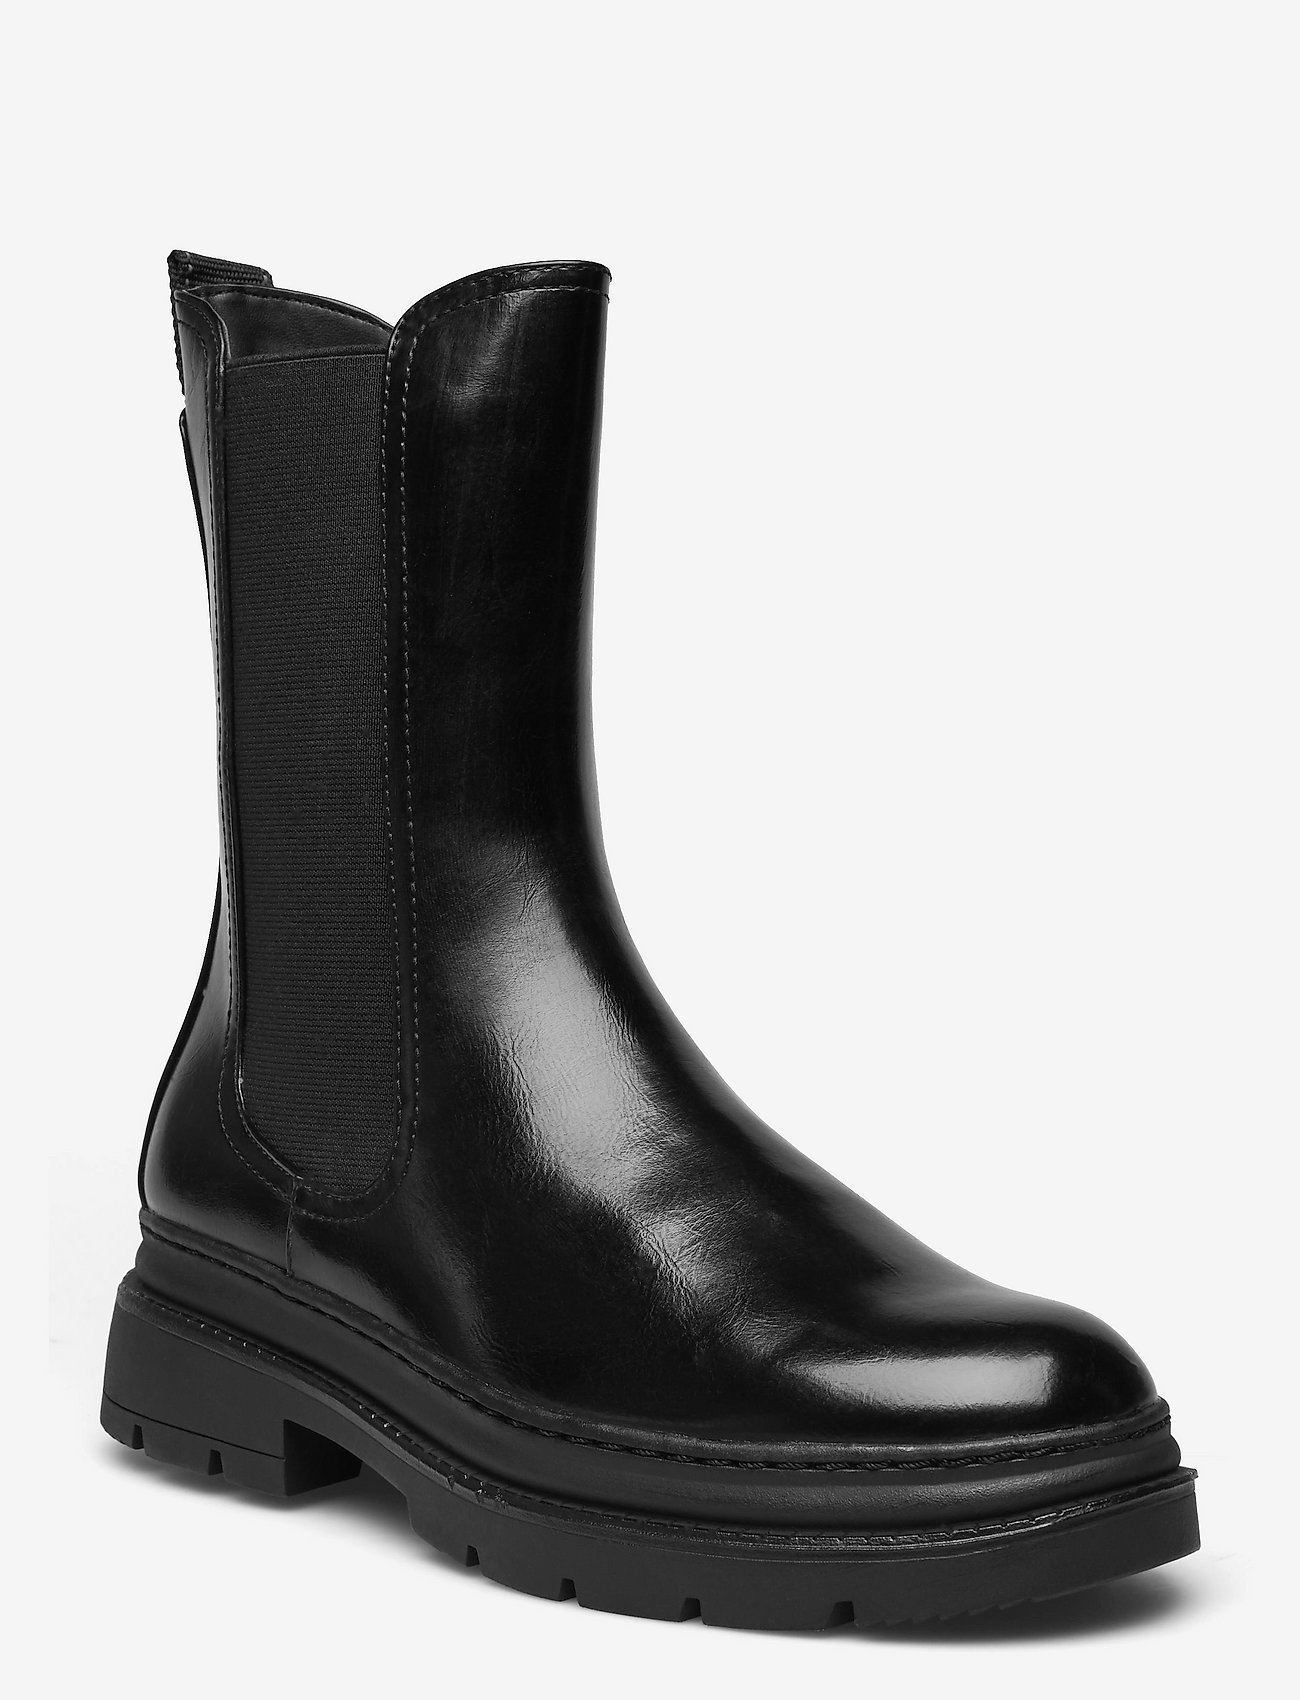 Sprog Benign Victor Tamaris Woms Boots - Chelsea støvler | Boozt.com